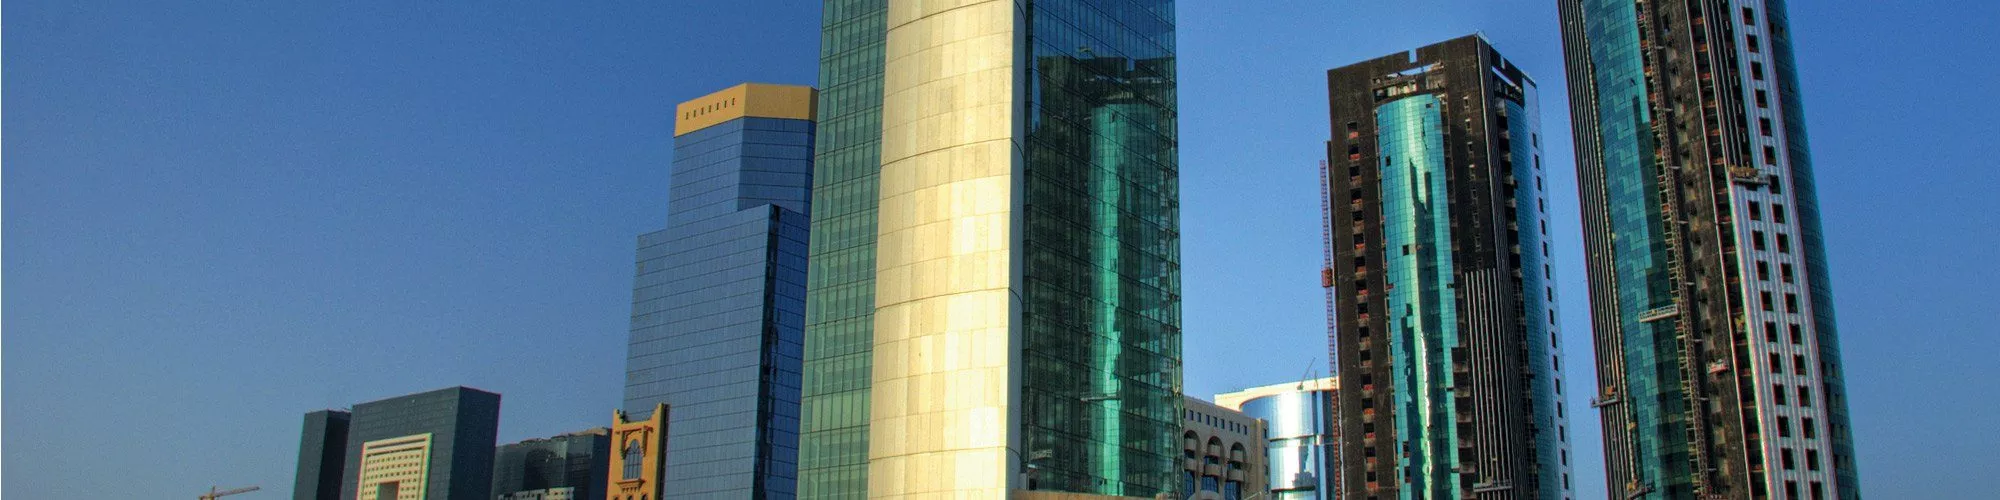 Commercial Bank Plaza Doha Banner 1